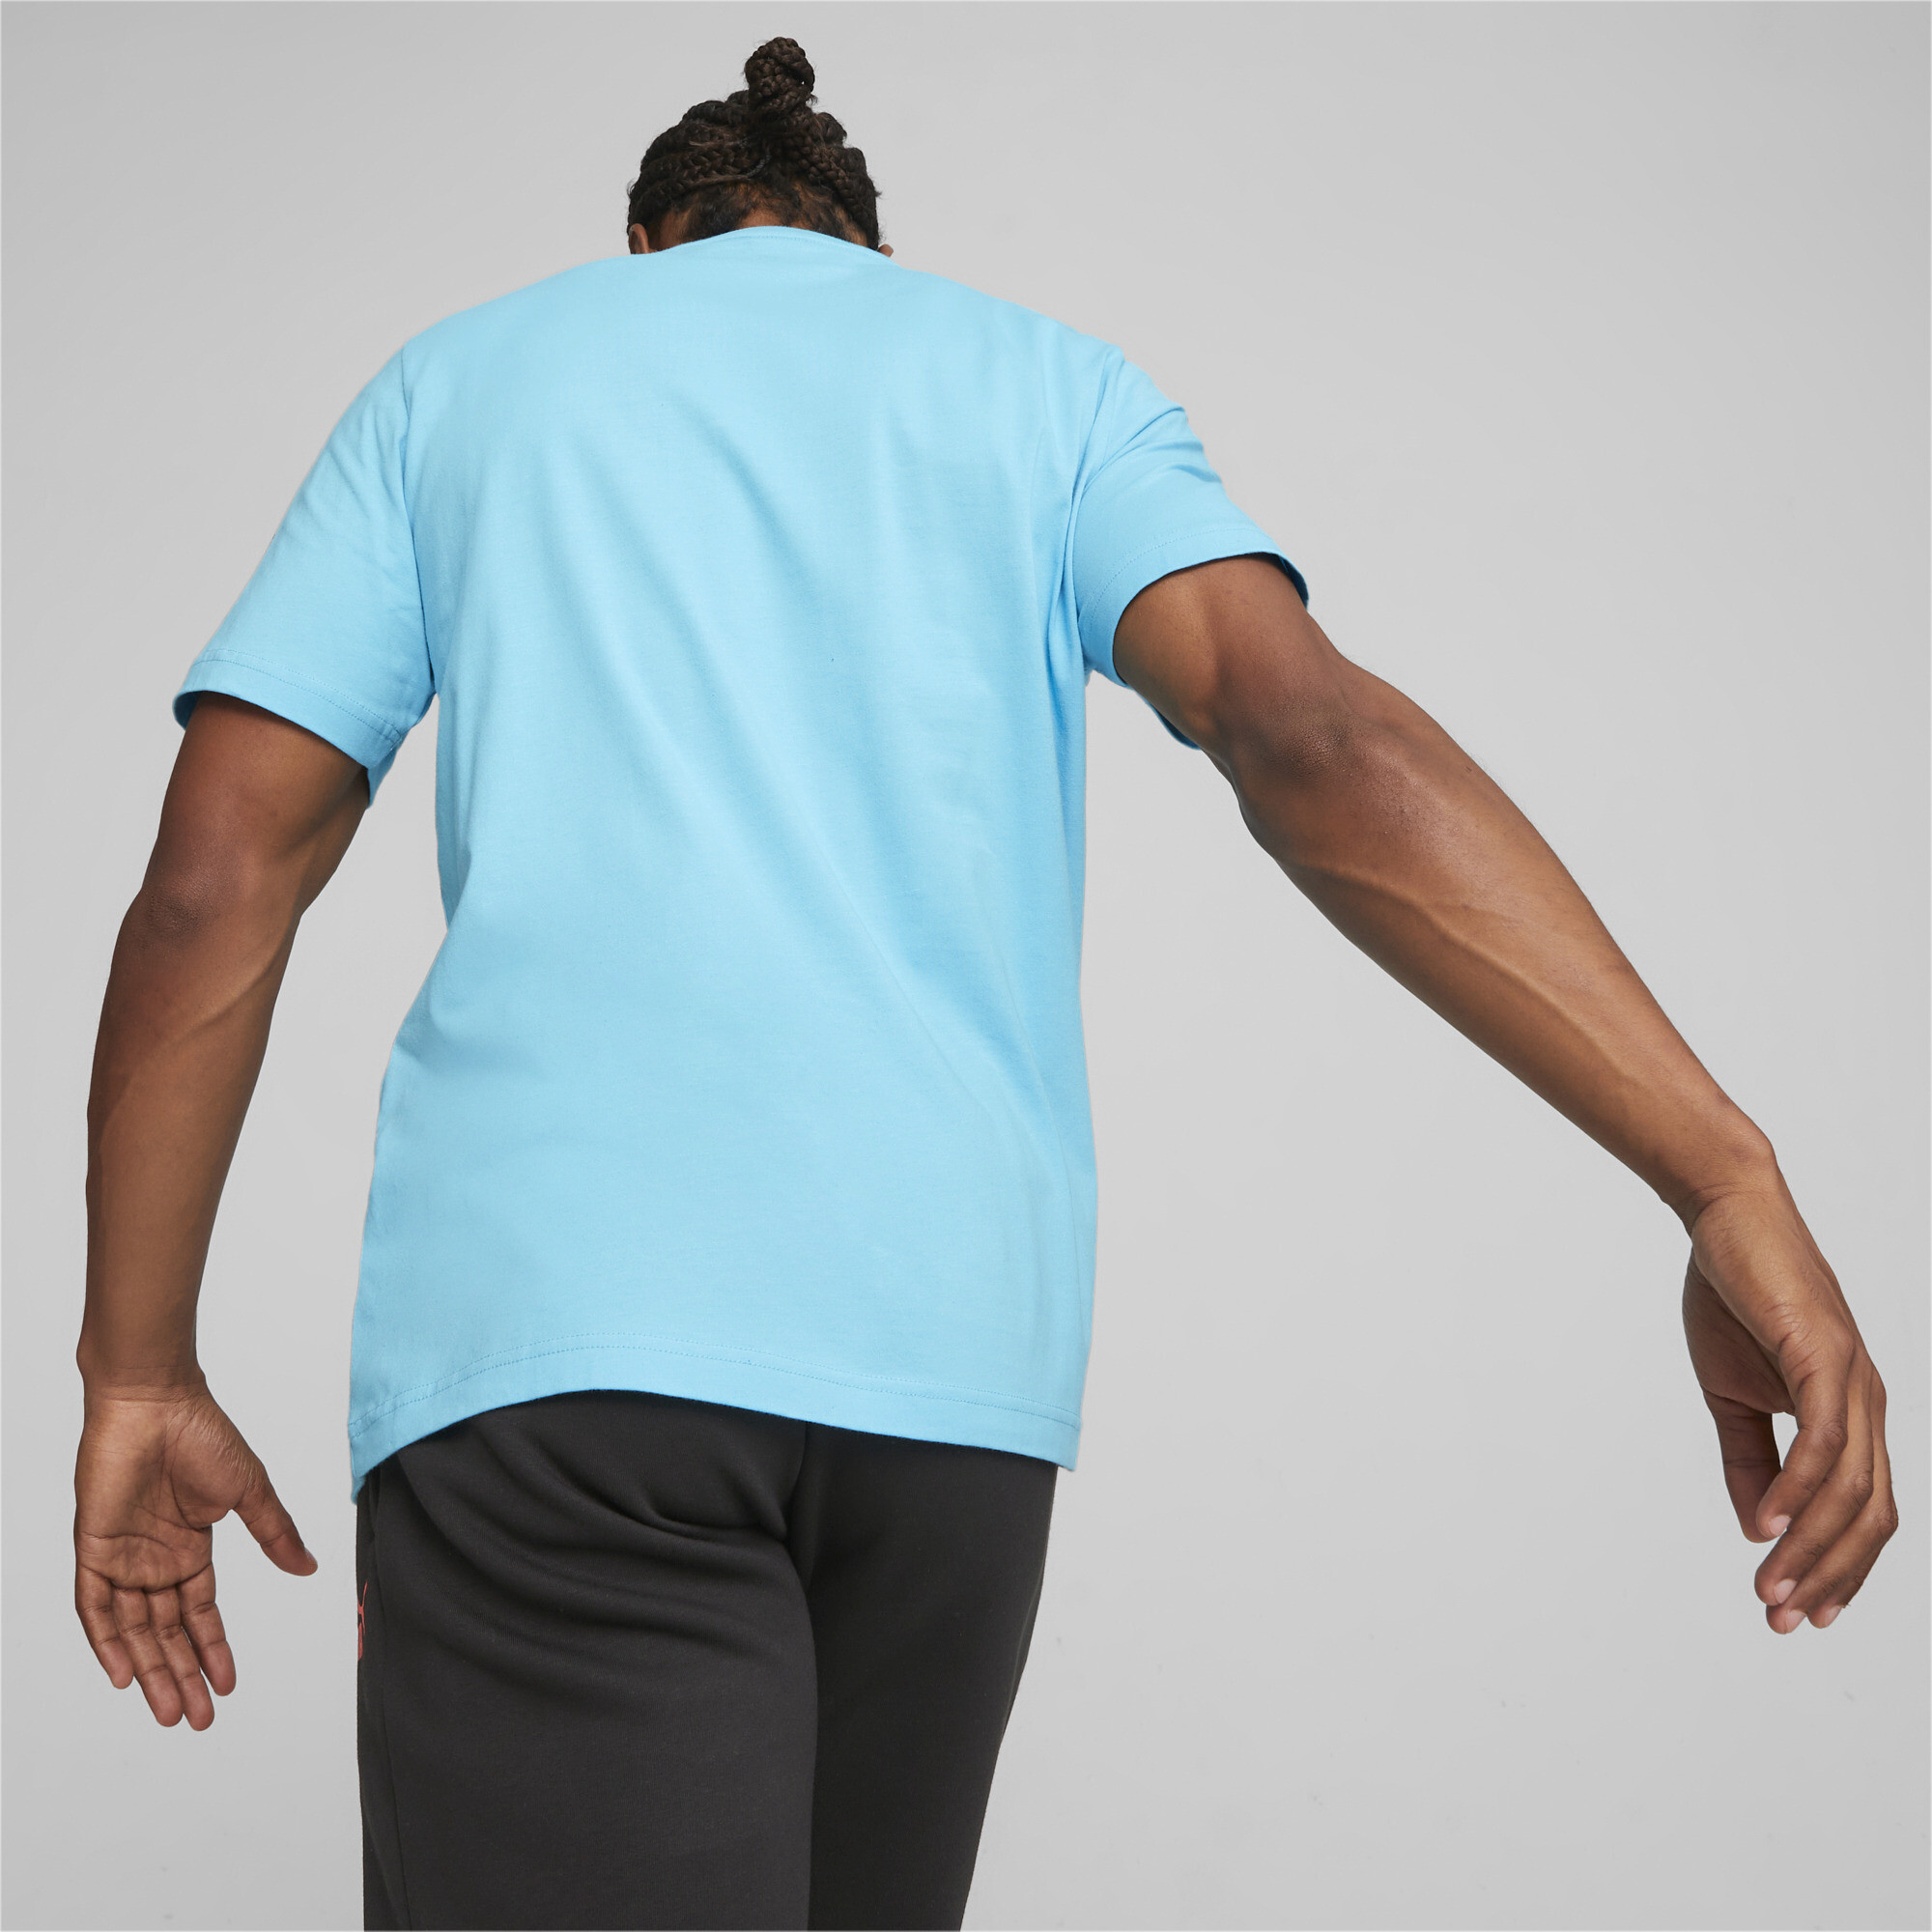 Men's PUMA Manchester City FtblCore Graphic T-Shirt In Blue, Size 2XL